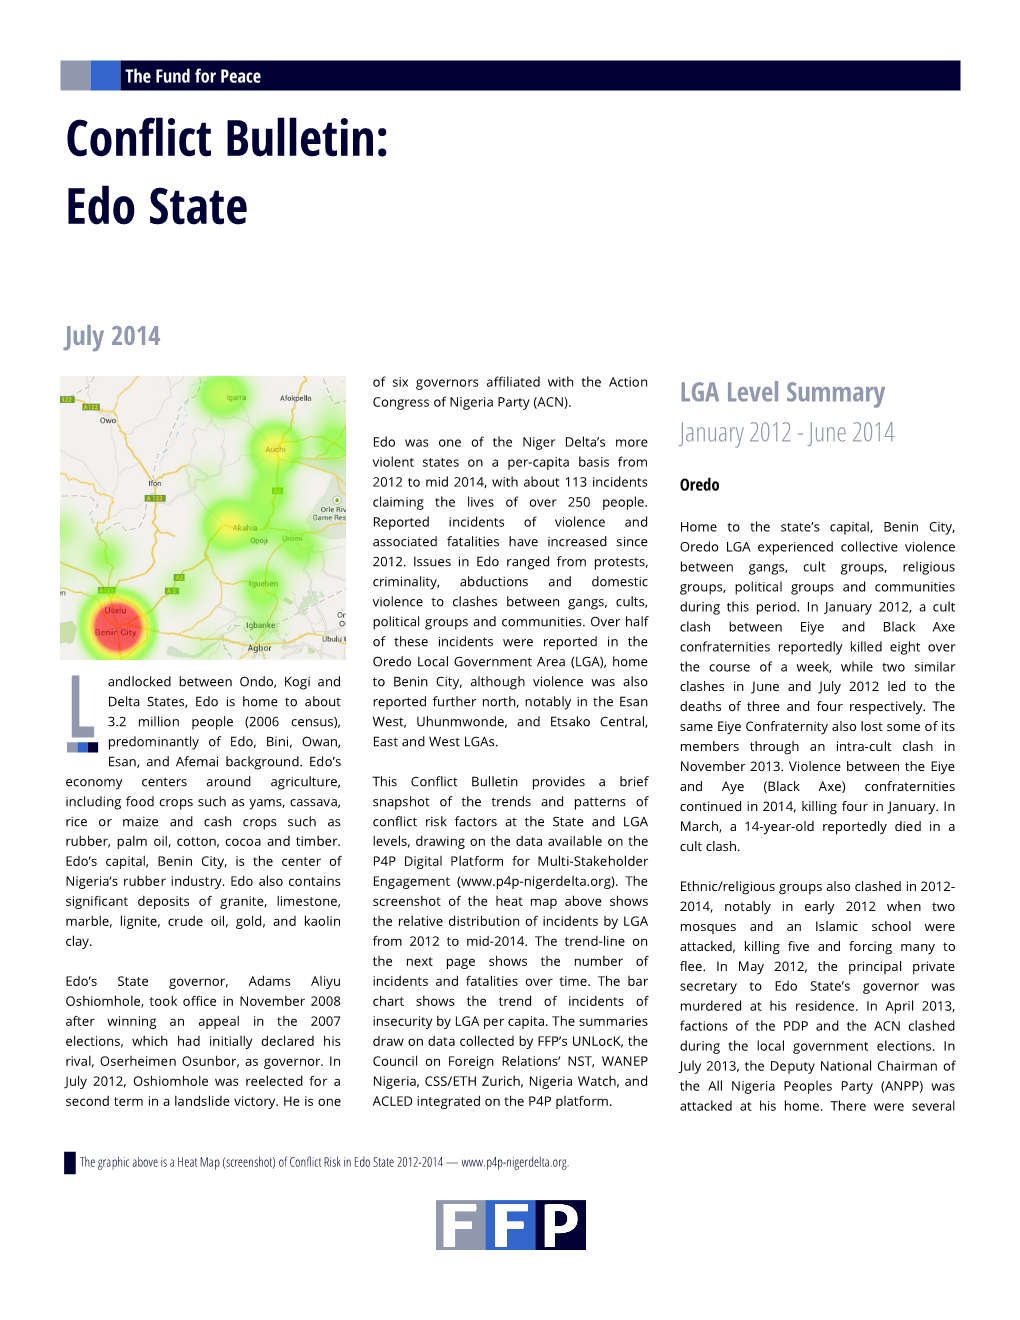 Conflict Bulletin: Edo State